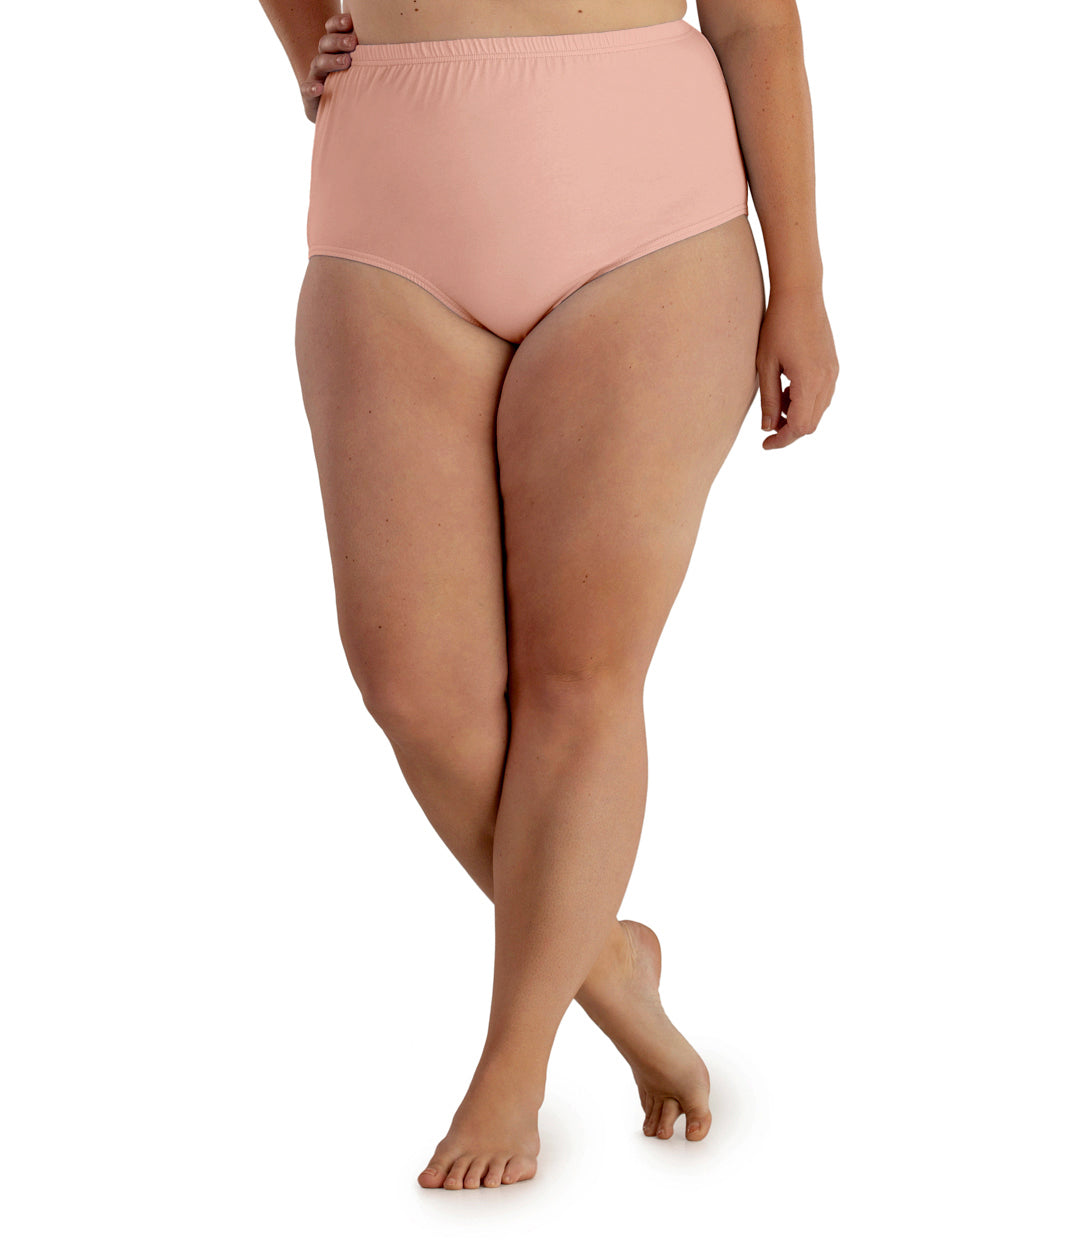  HELLORSO Womens Underwear Size 8 Colors Optiont